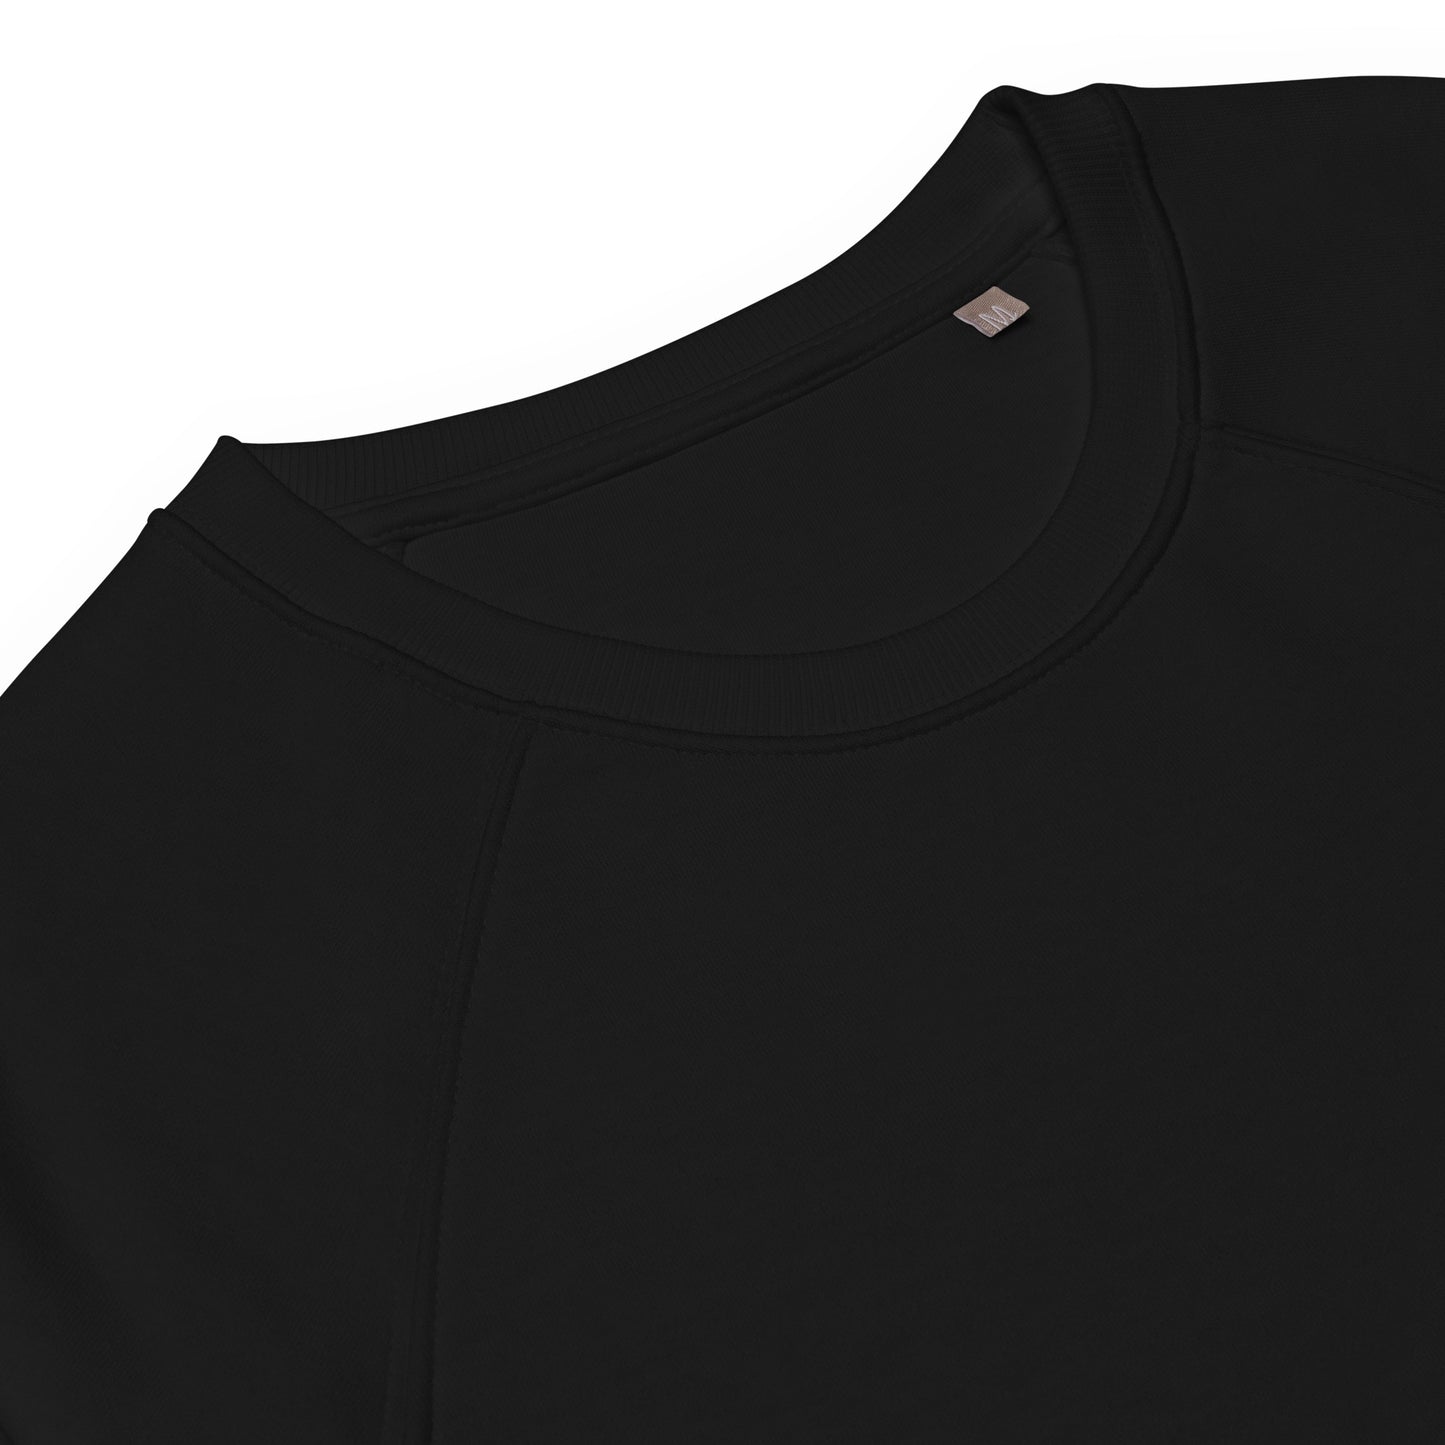 EVOC D1 - Unisex organic raglan sweatshirt